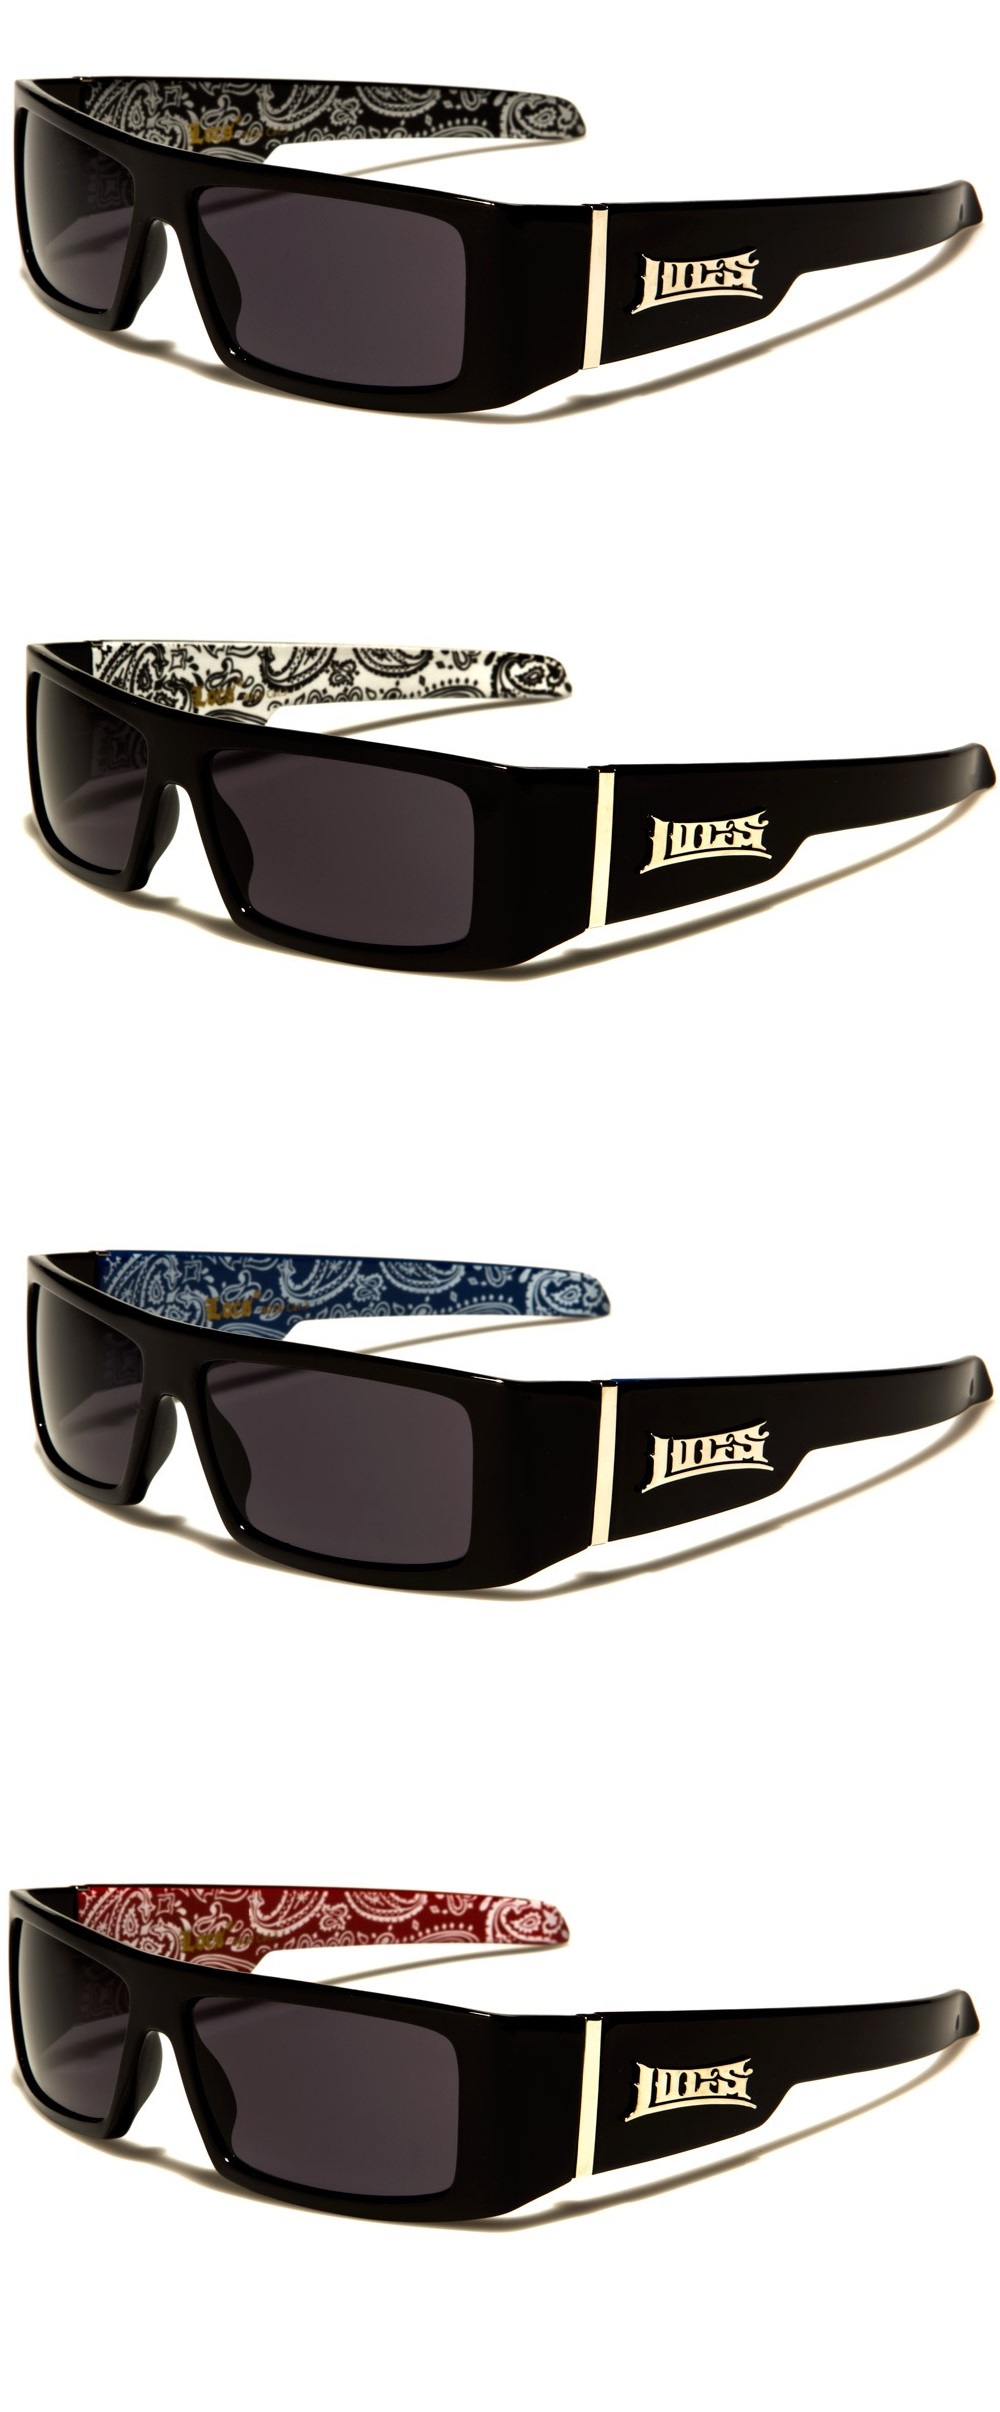 photo of sunglasses